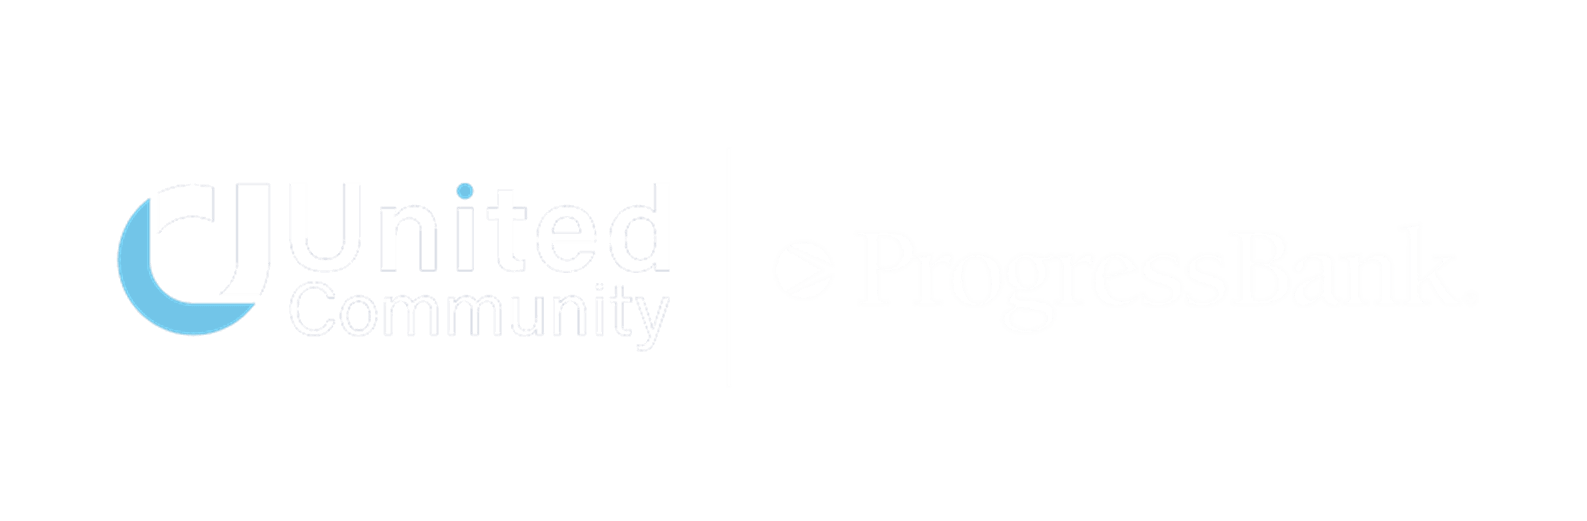 _progress and united community logos